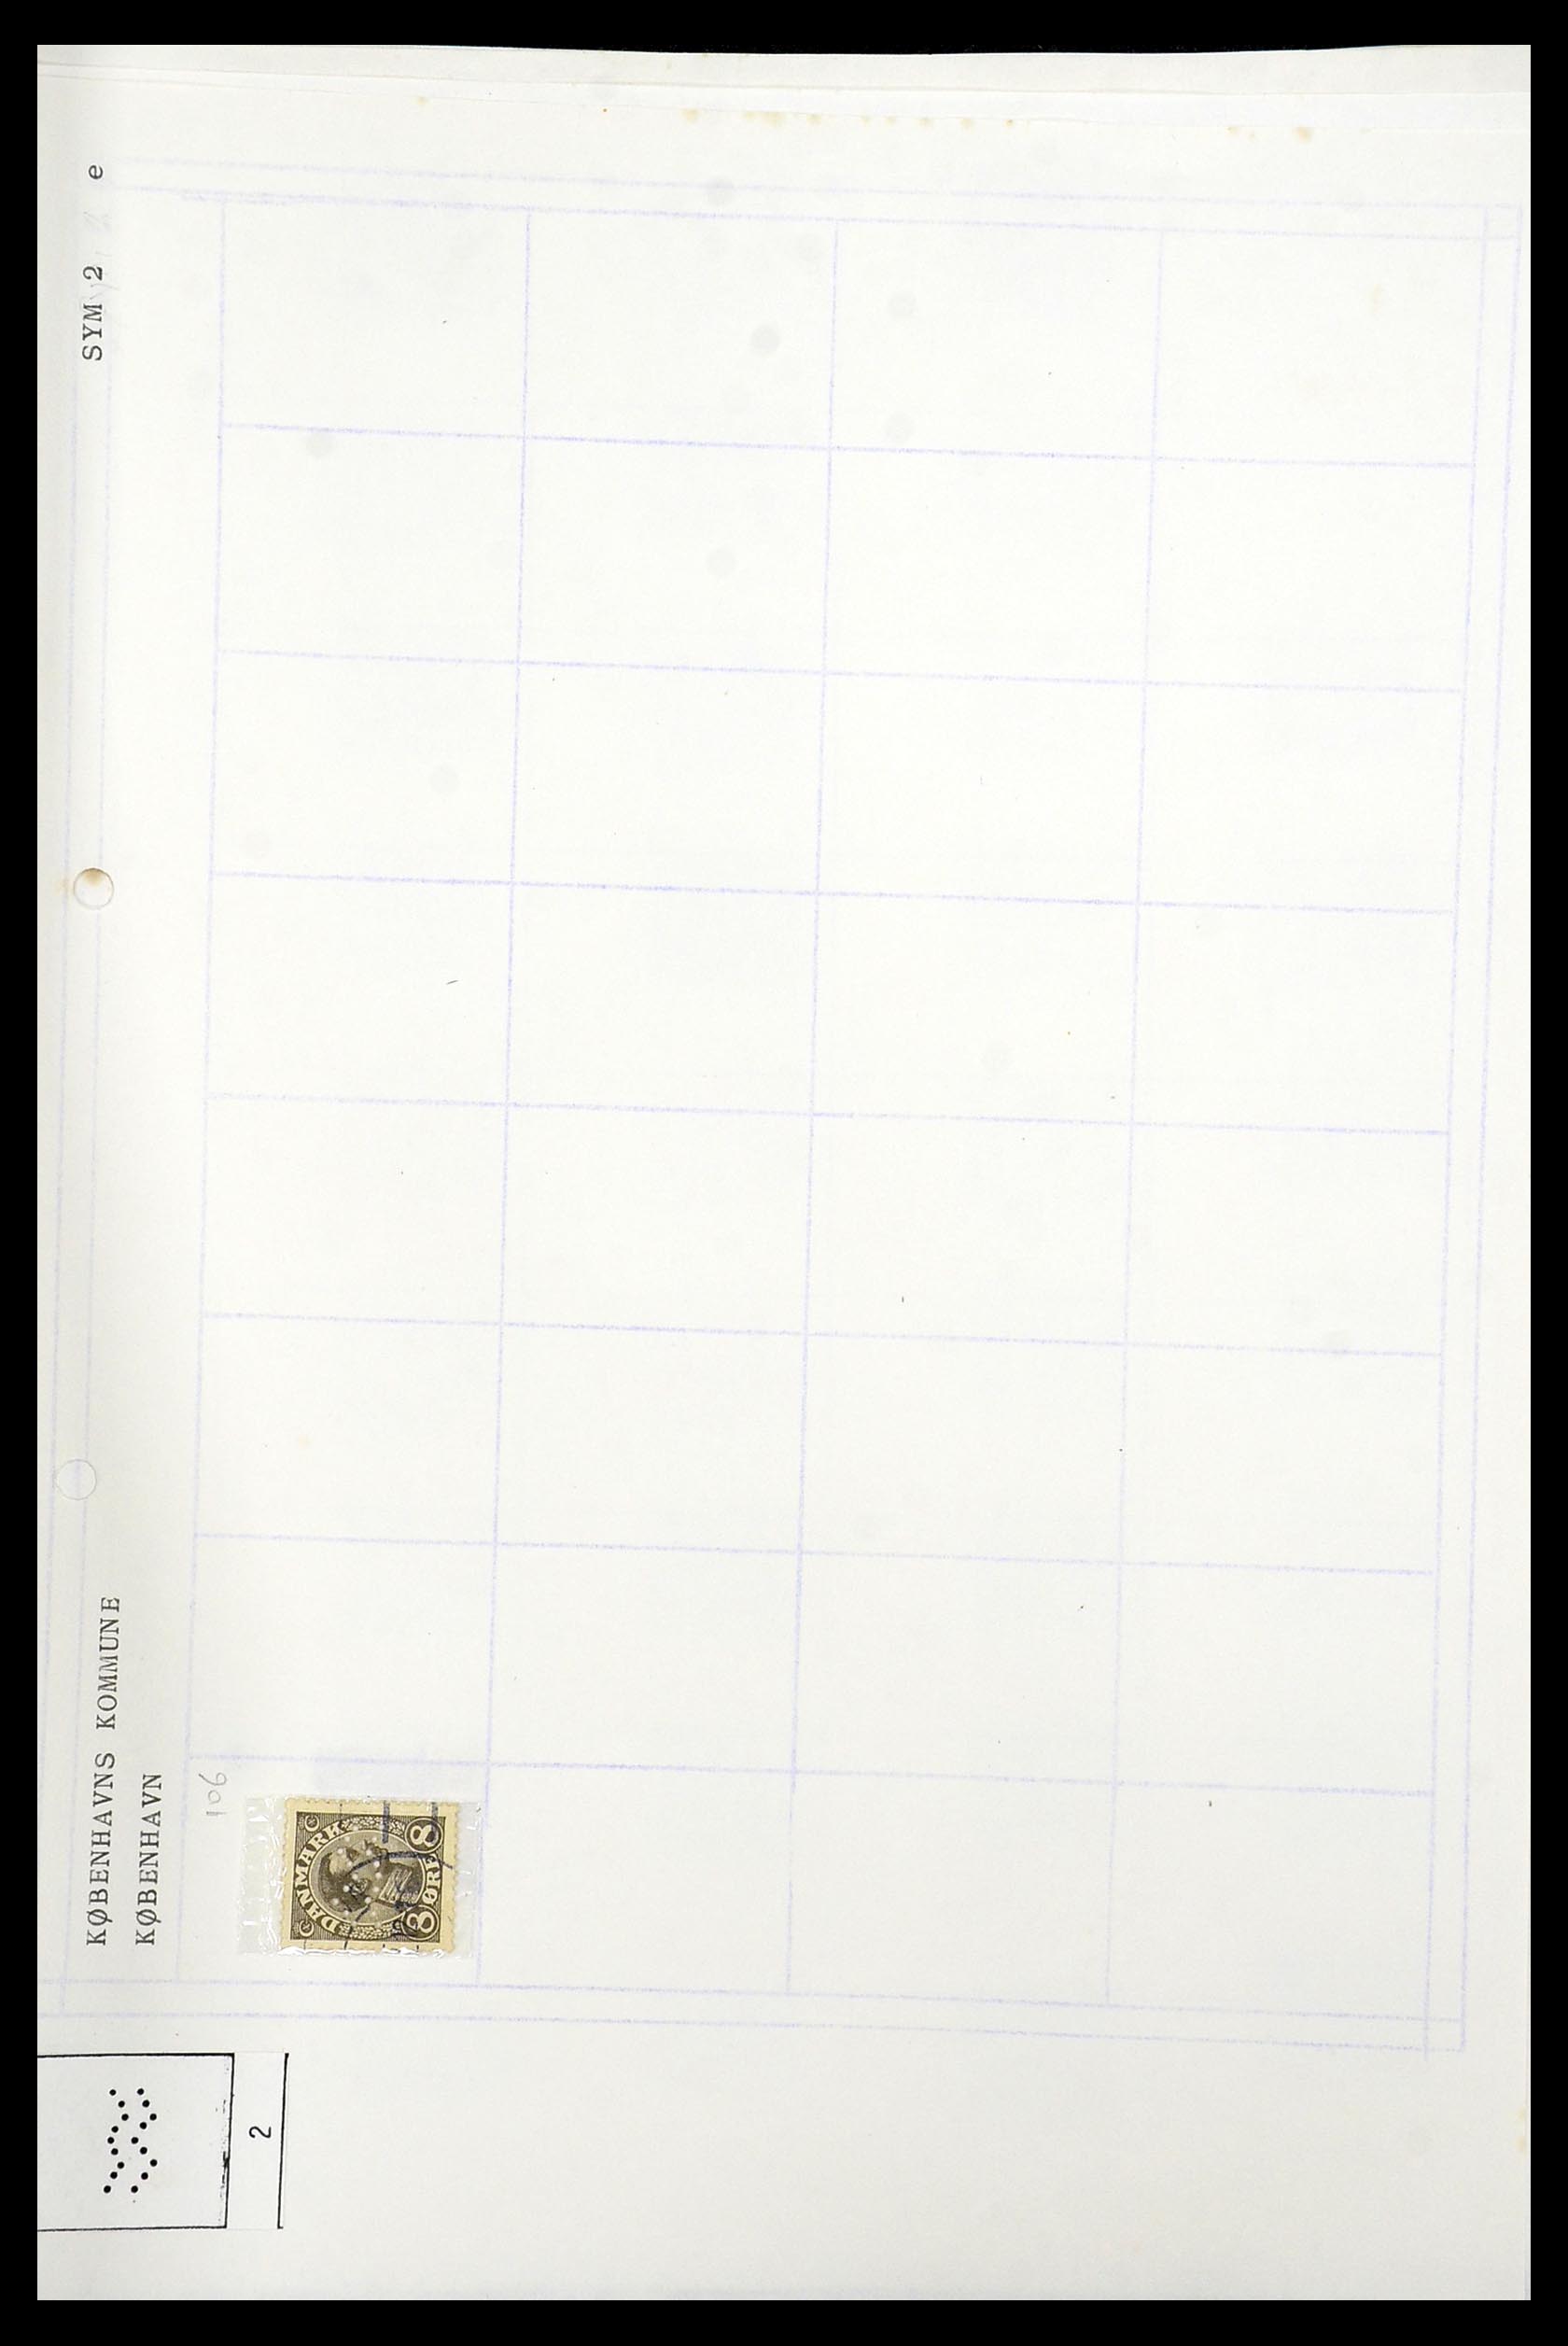 34415 276 - Stamp Collection 34415 Denmark perfins 1875-1980.